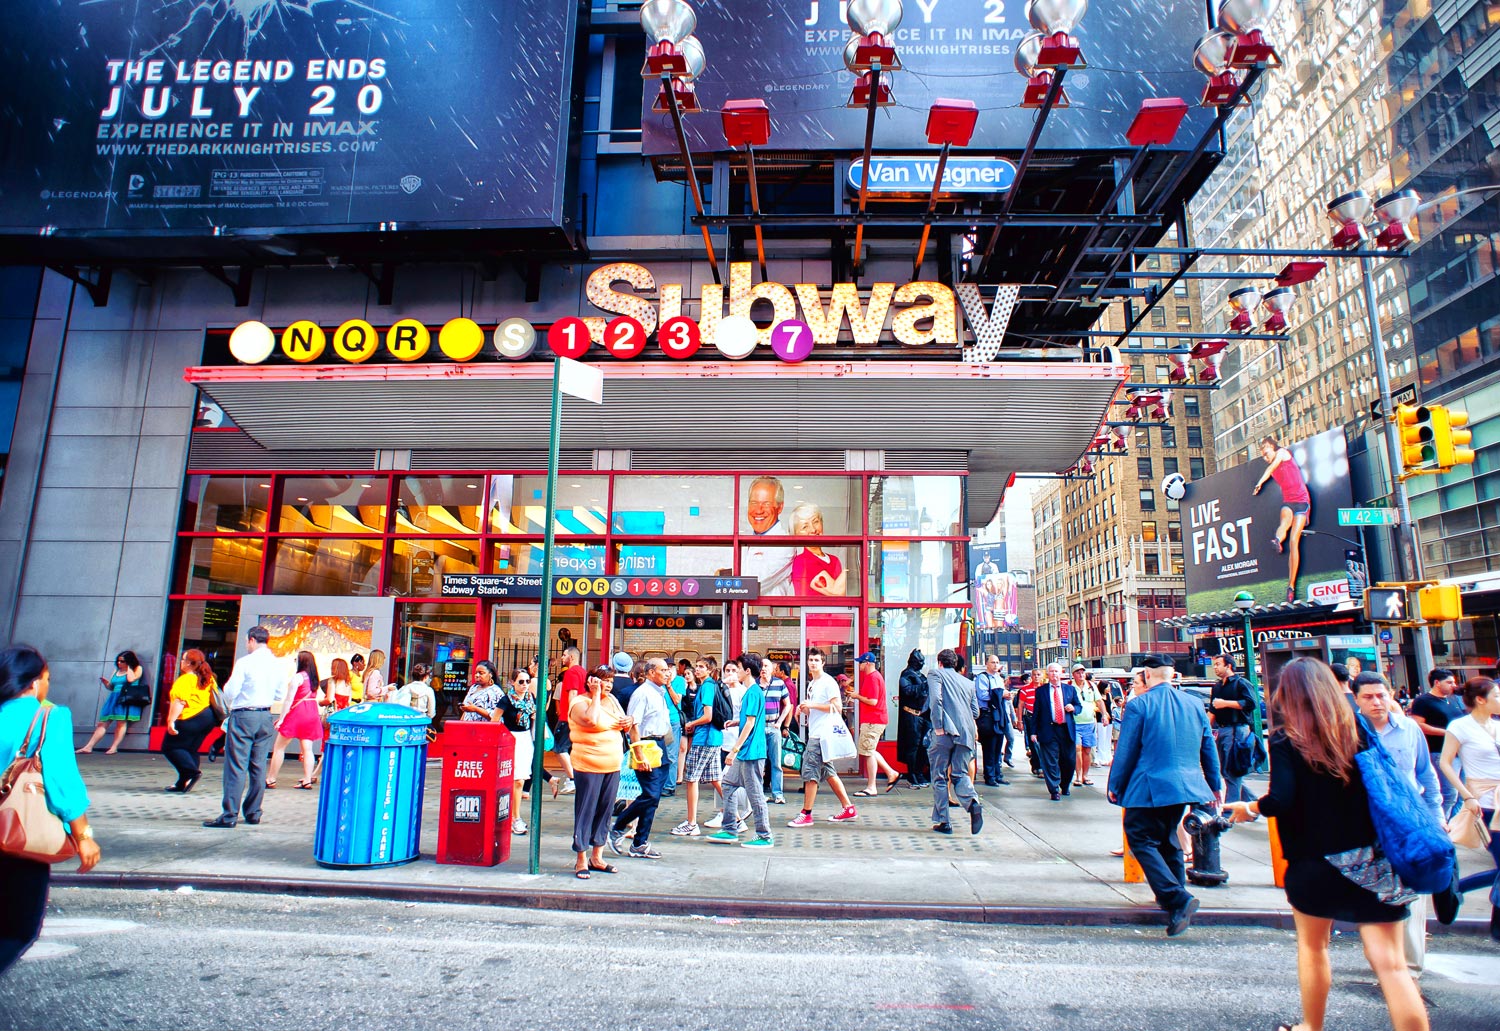 42nd Street Subway in New York City